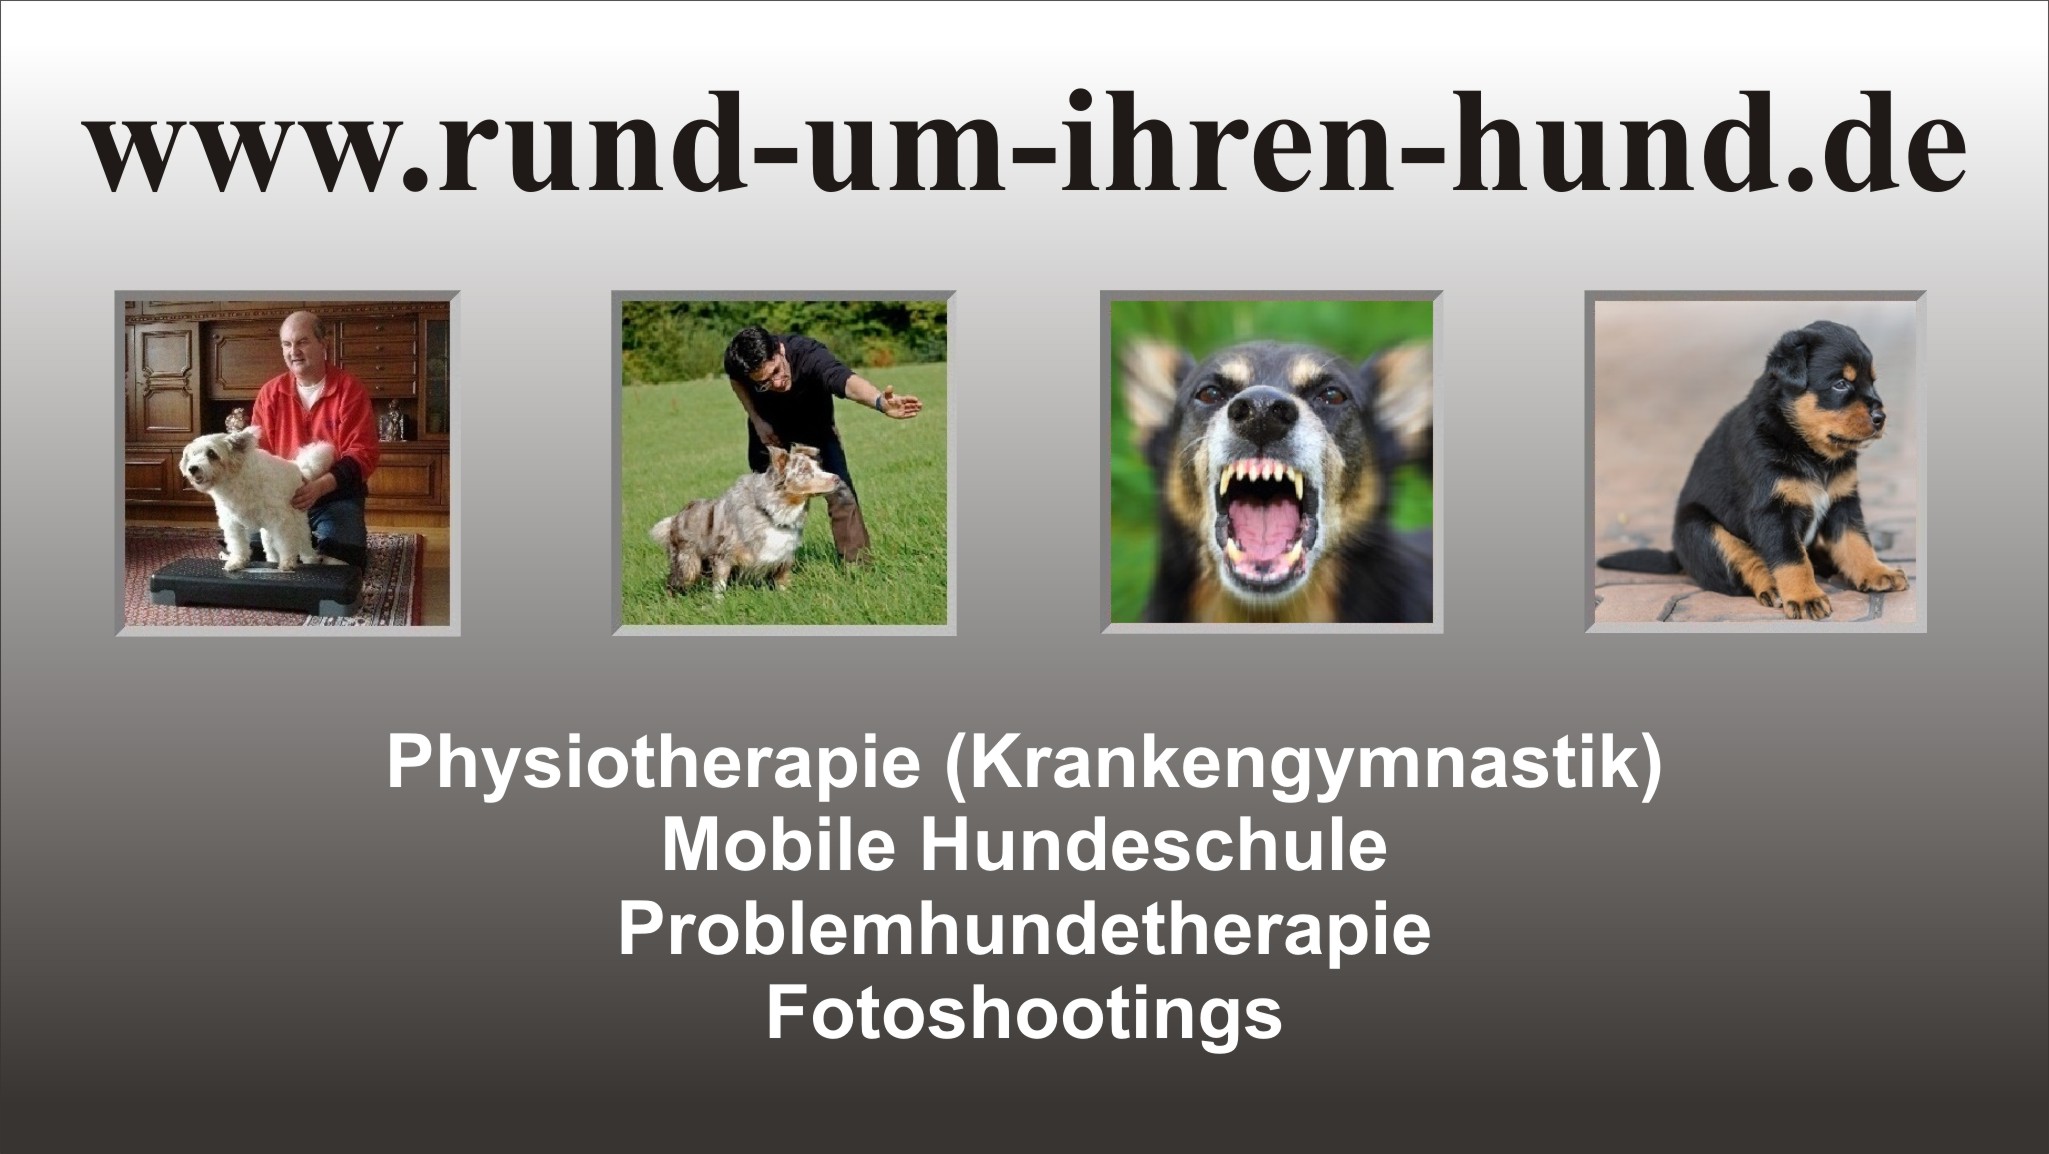 Infos zu Hundephysiotherapie, mobile Hundeschule, Problemhundetherapie, Fotoshootings